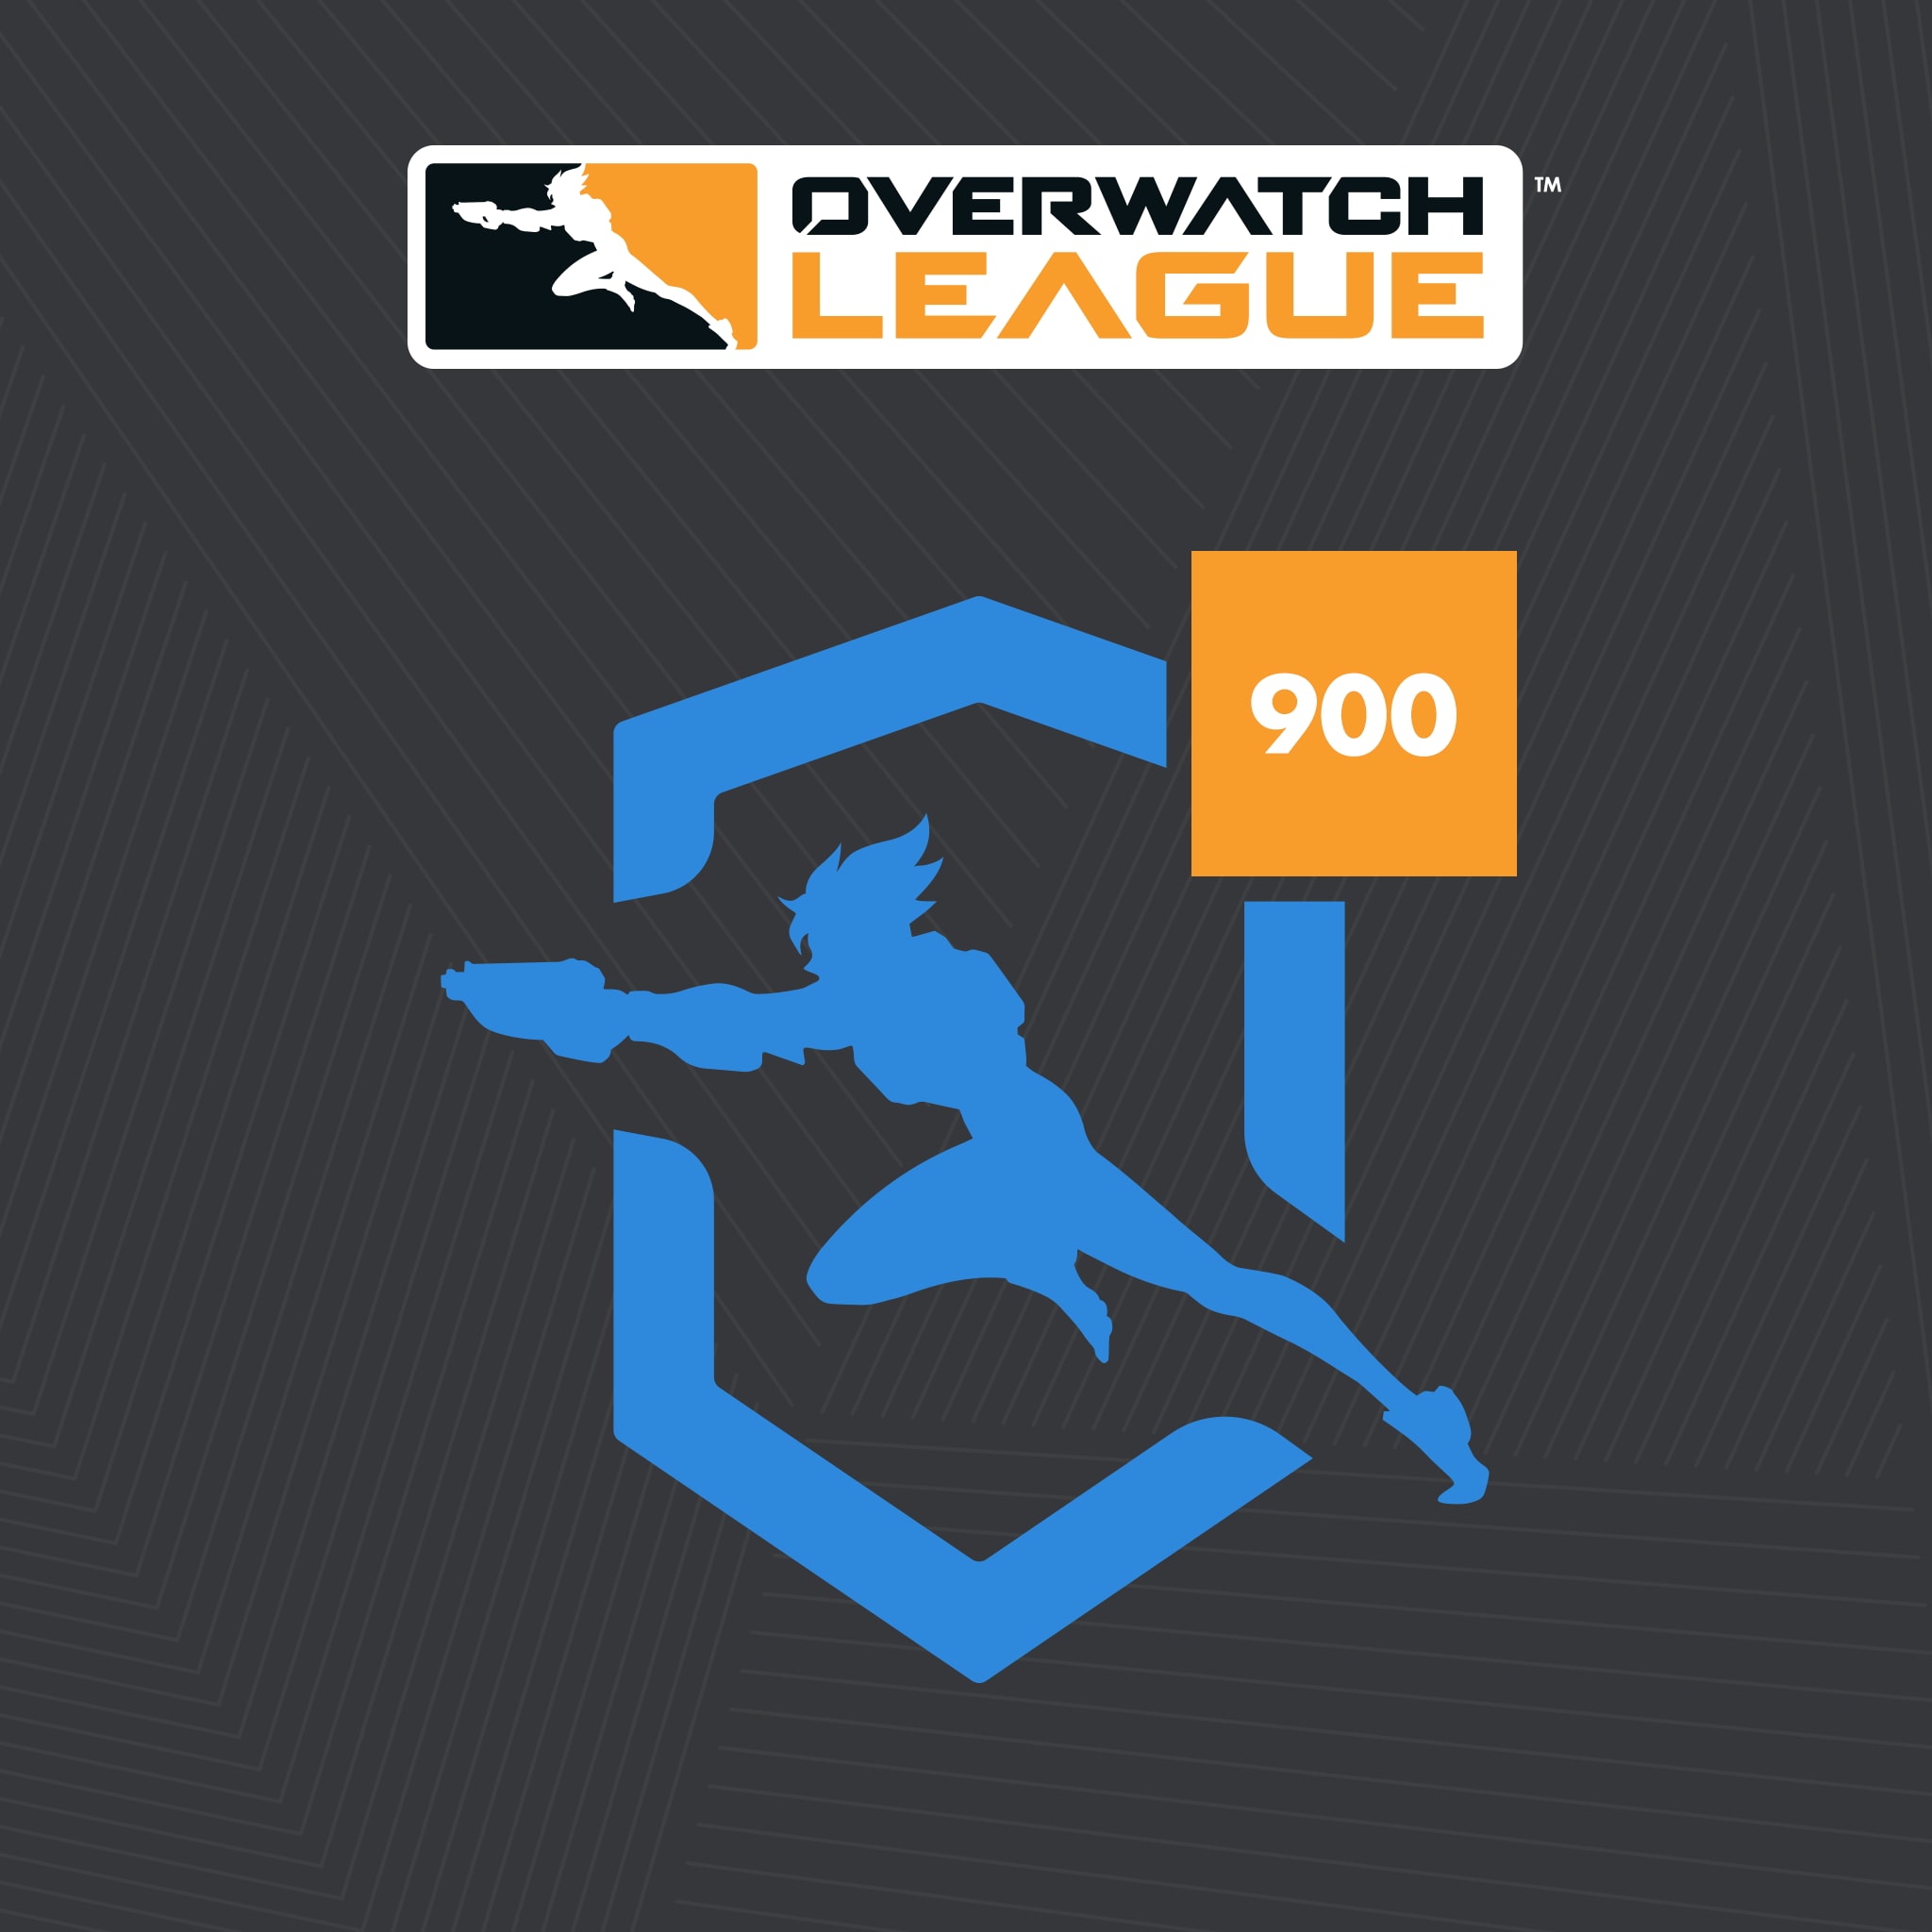 Overwatch League™ - 900 عملة رمزية للدوري